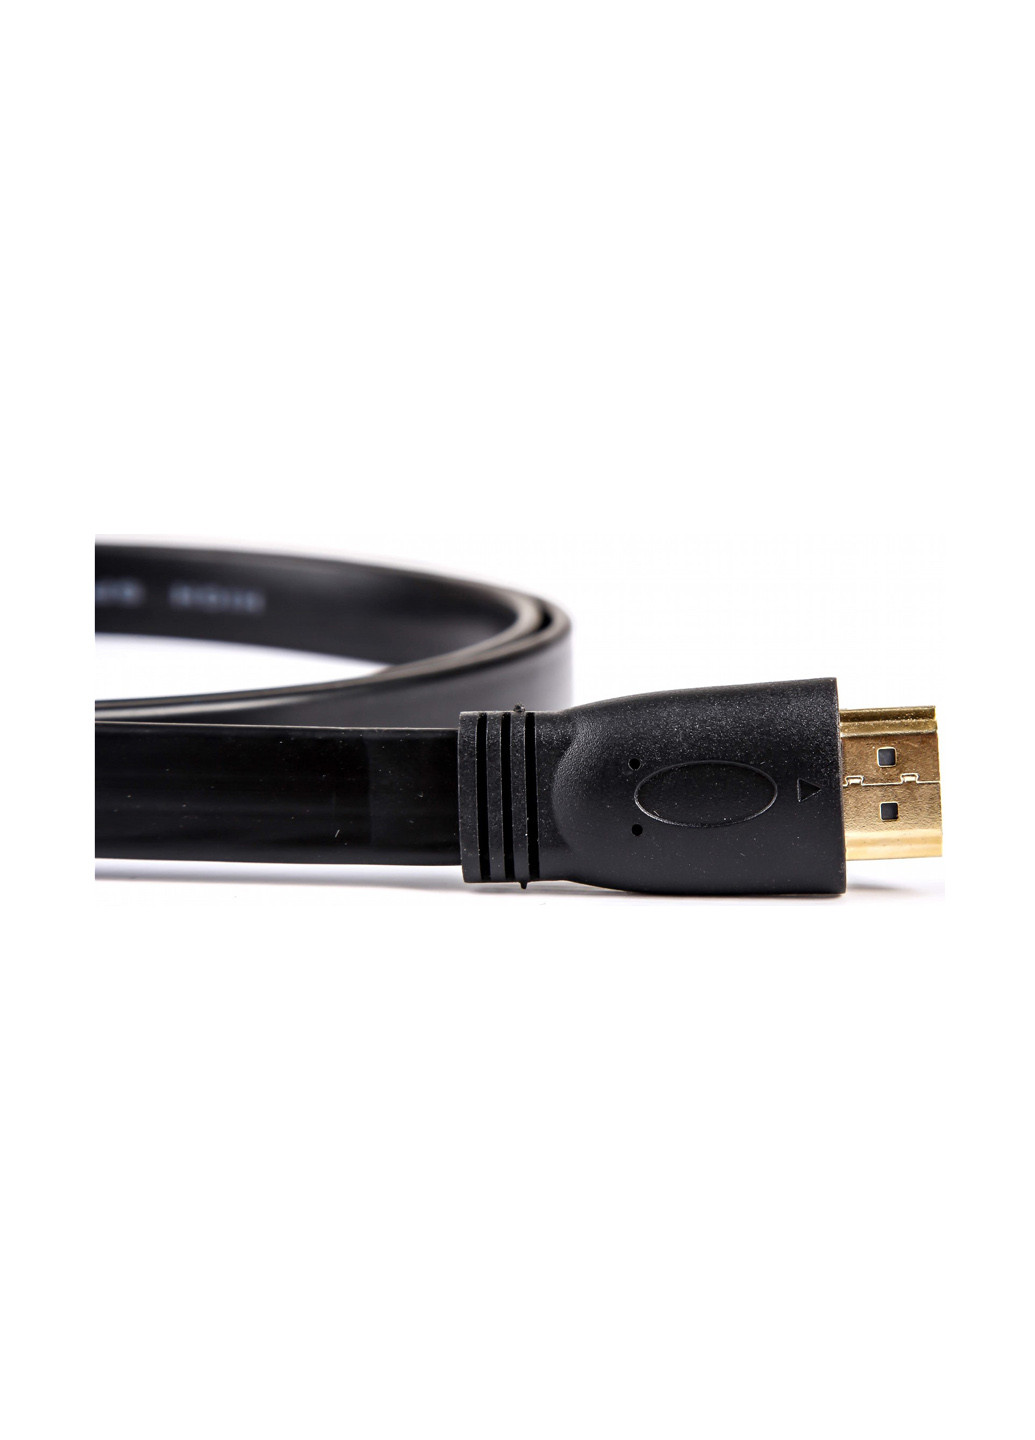 Кабель HDMI 1.4 v, 1,2 м (80012) CHARMOUNT кабель charmount hdmi 1.4 v, 1,2 м (80012) (145607416)